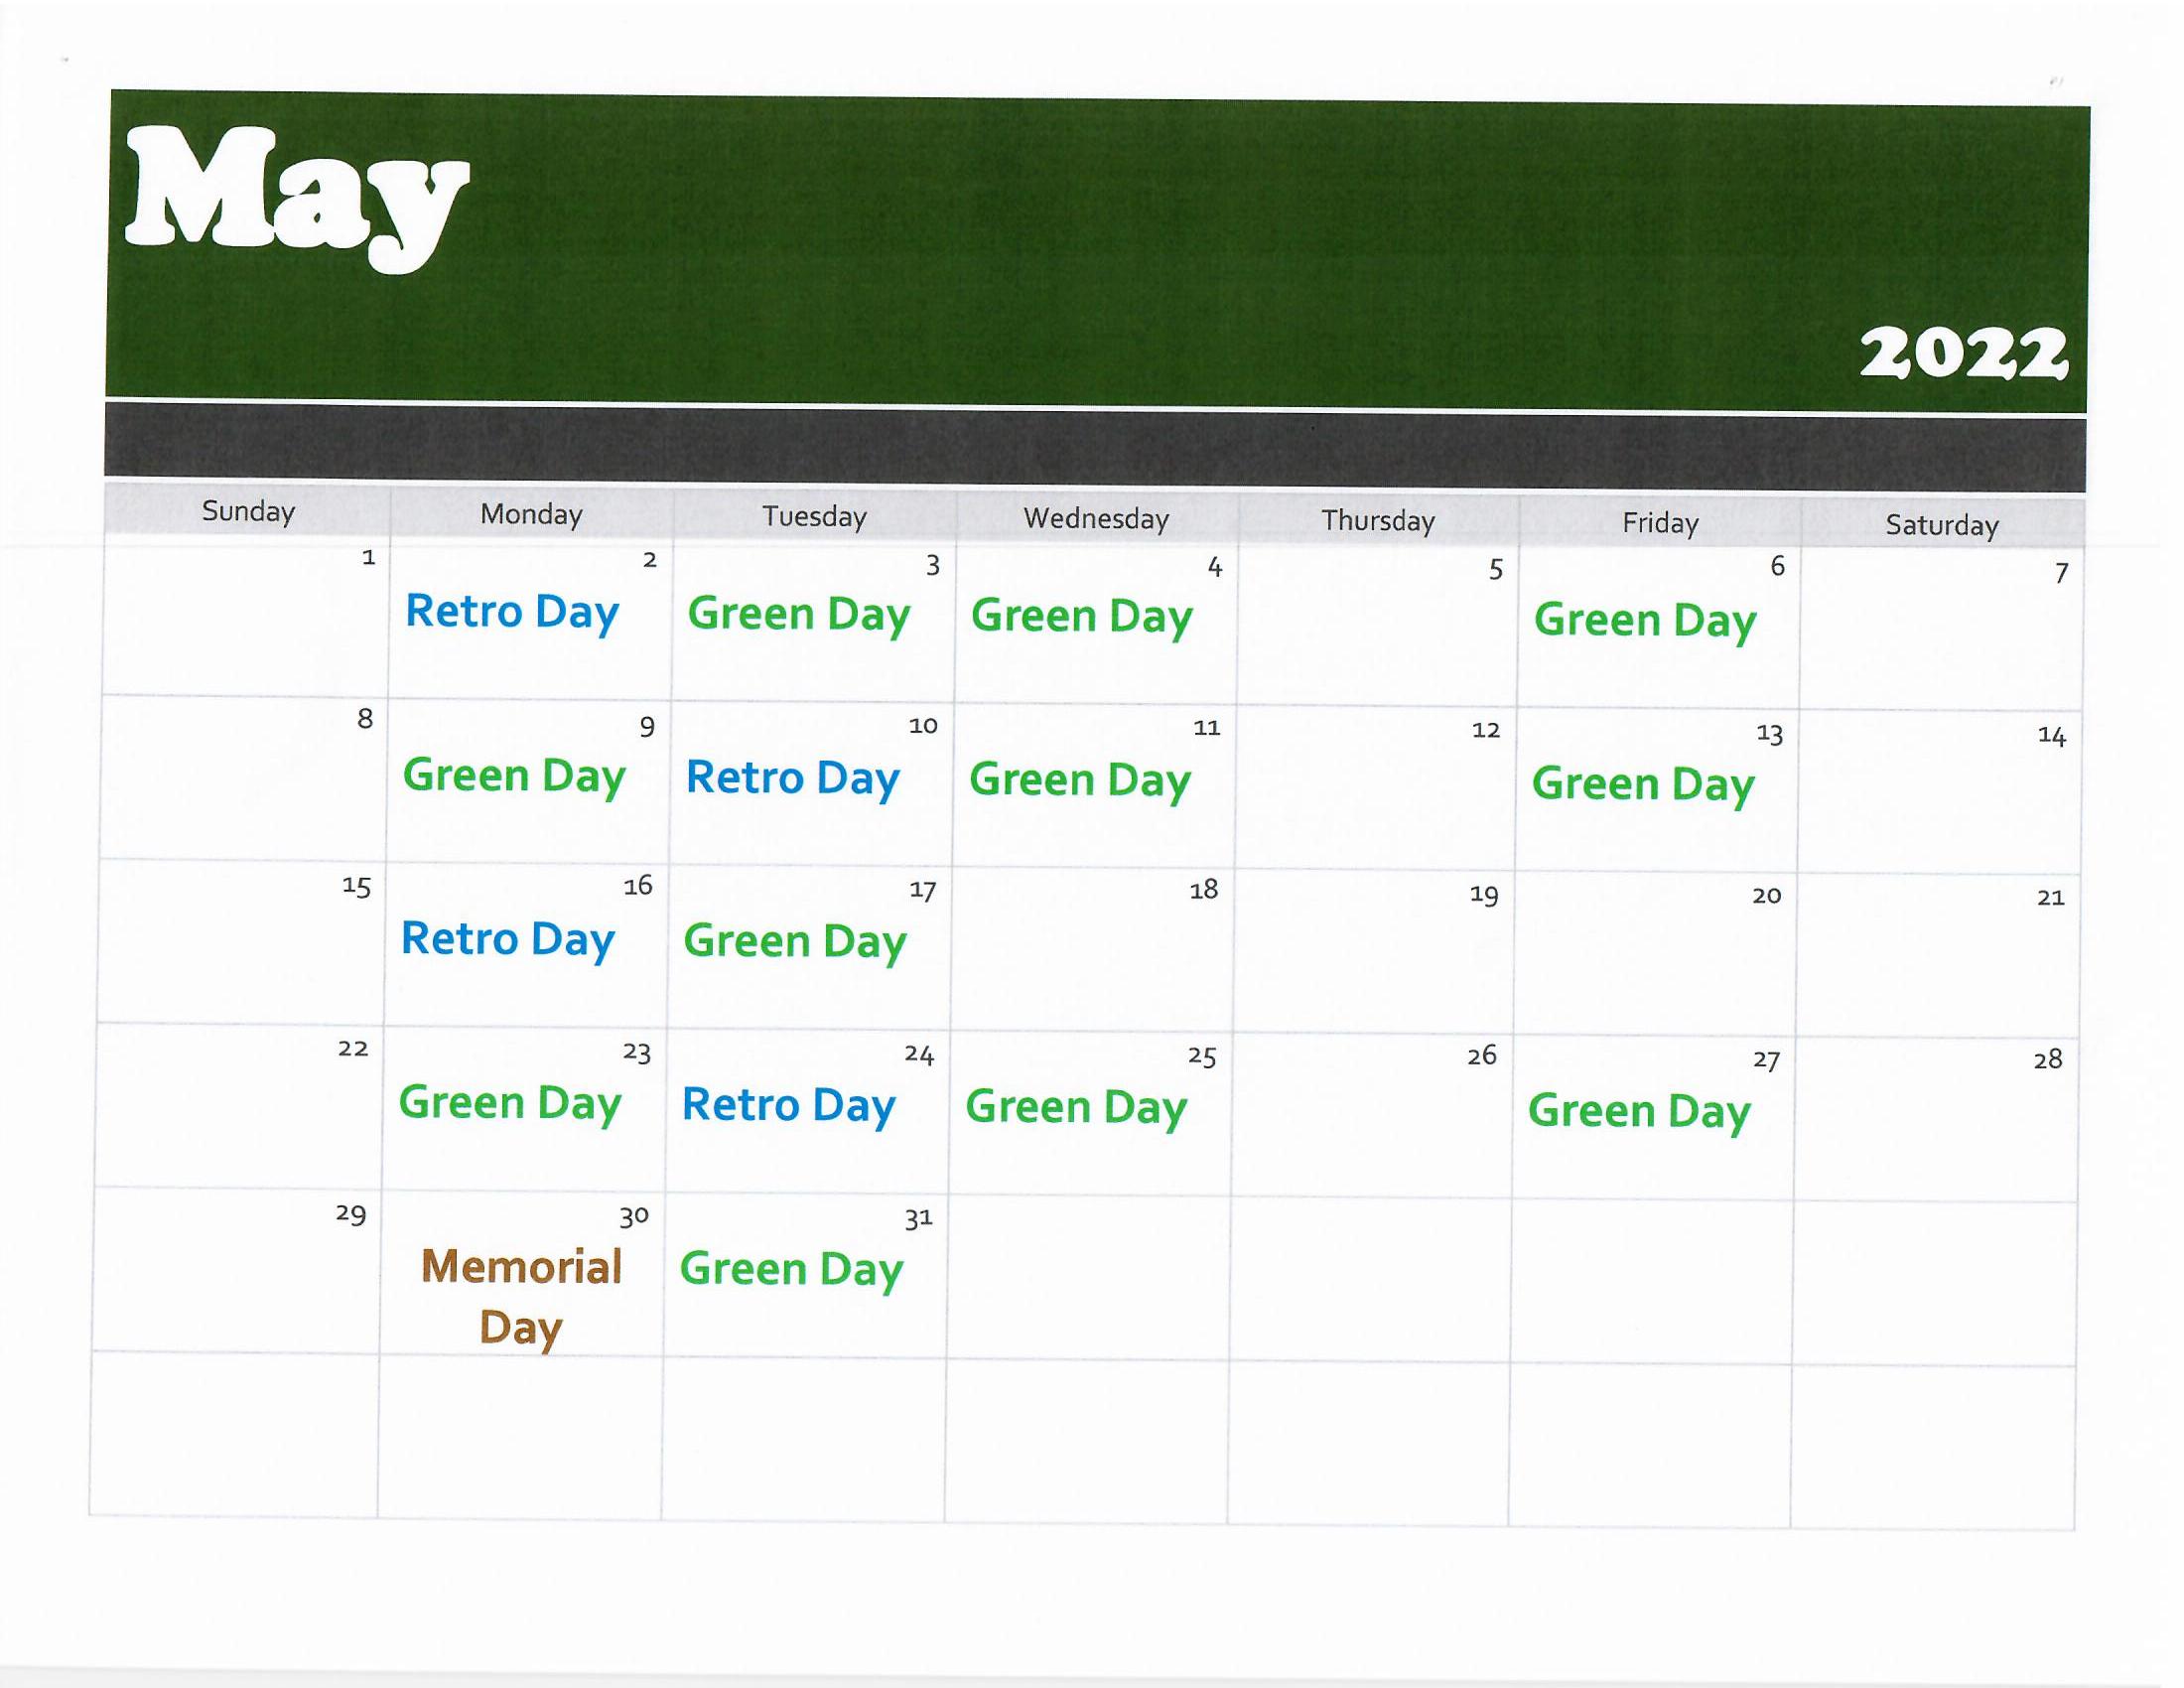 May golf calendar